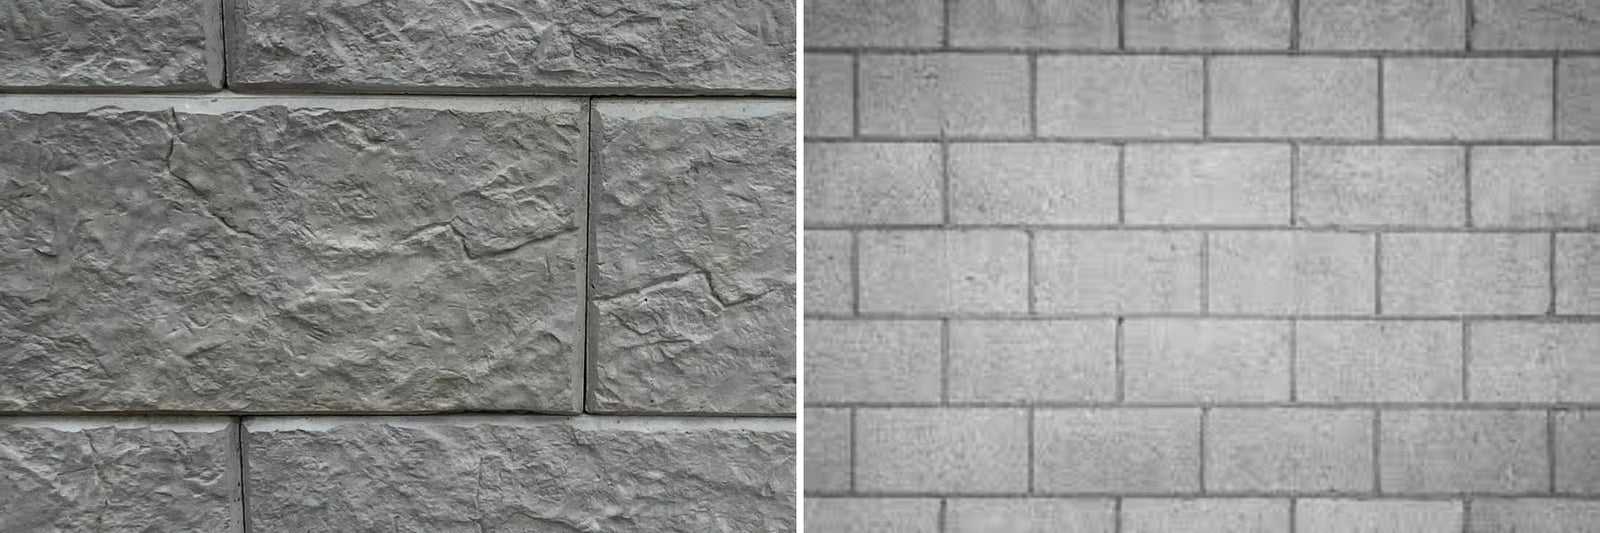 Differences Between Cinder Blocks And Concrete Blocks - Civil Engineering  Portal